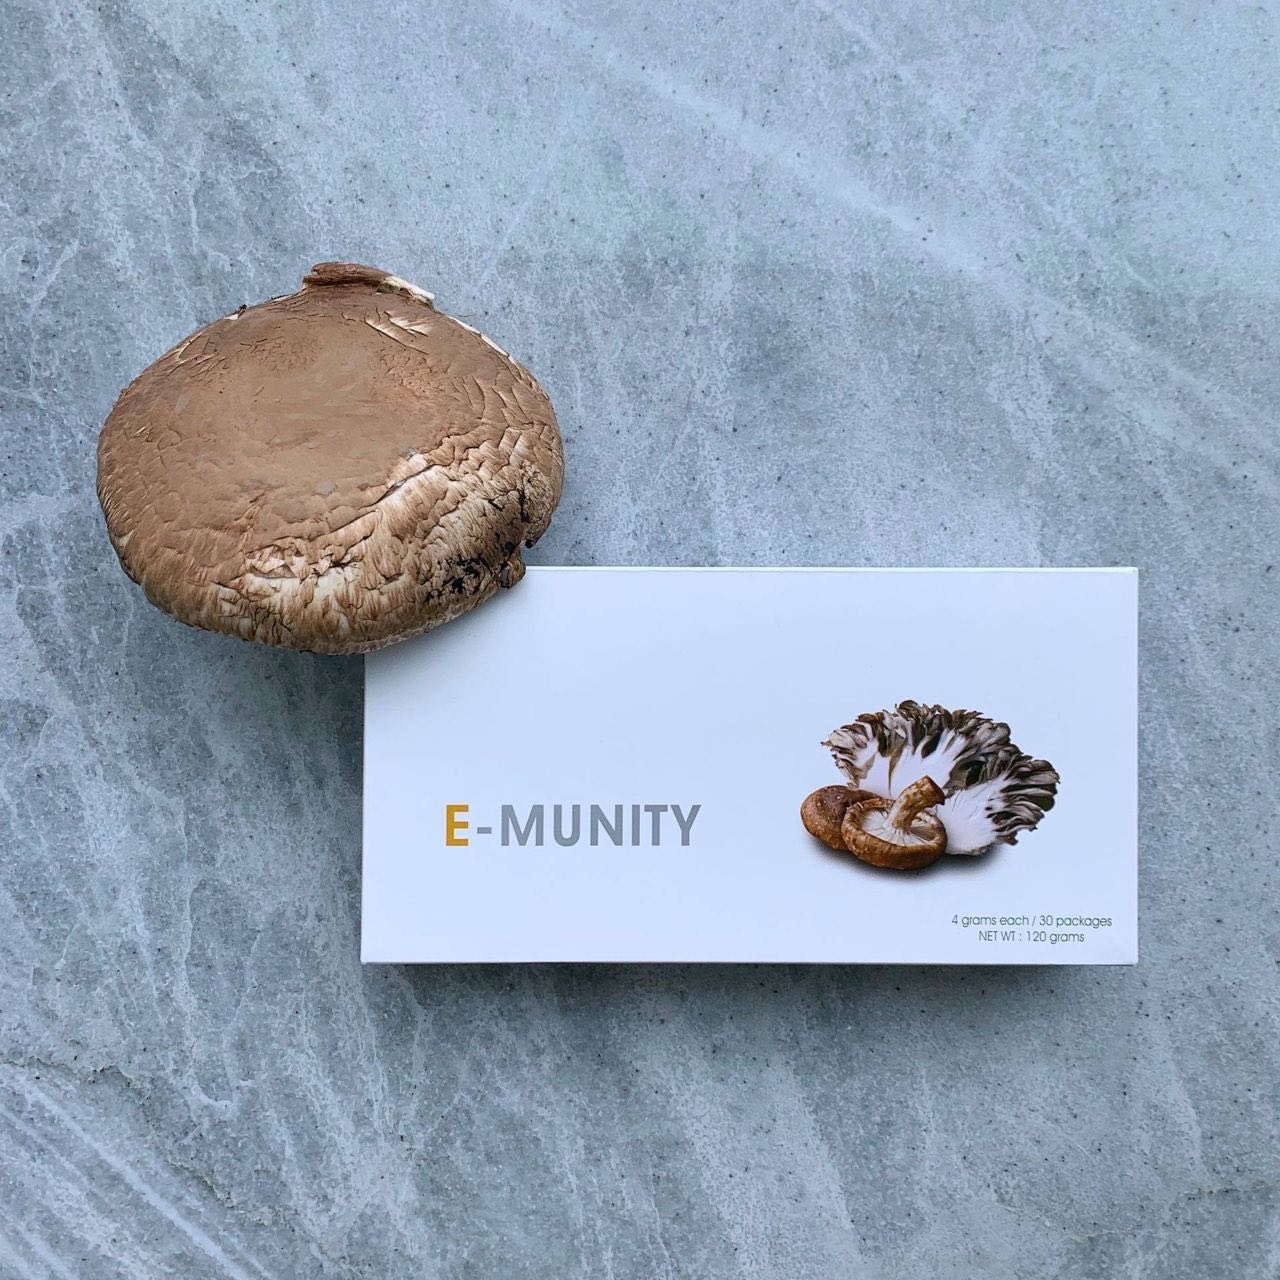 E-munity 蕈菇